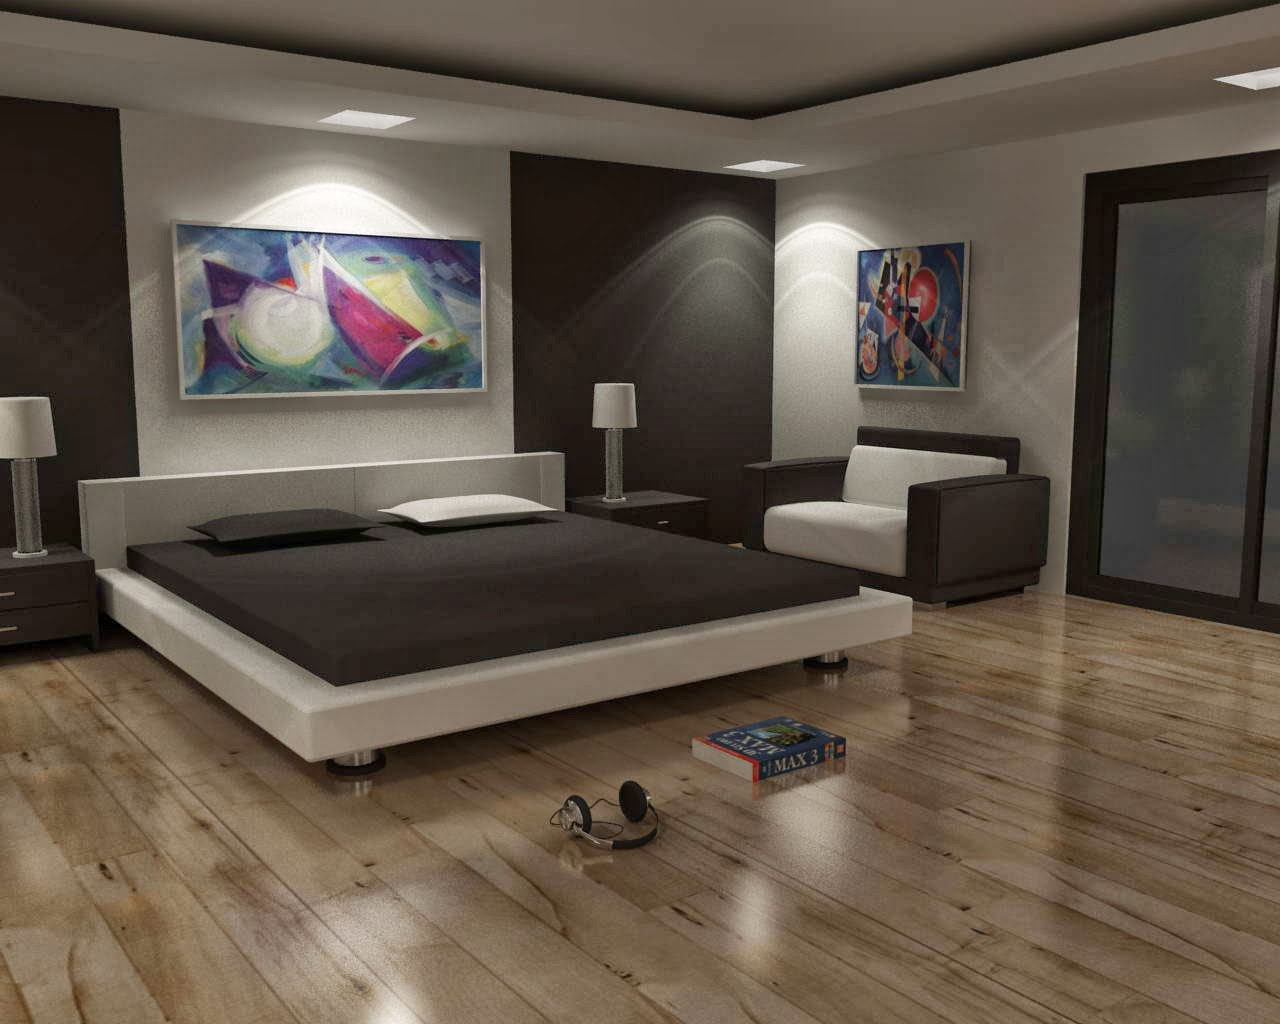 Interior Bedroom Design 